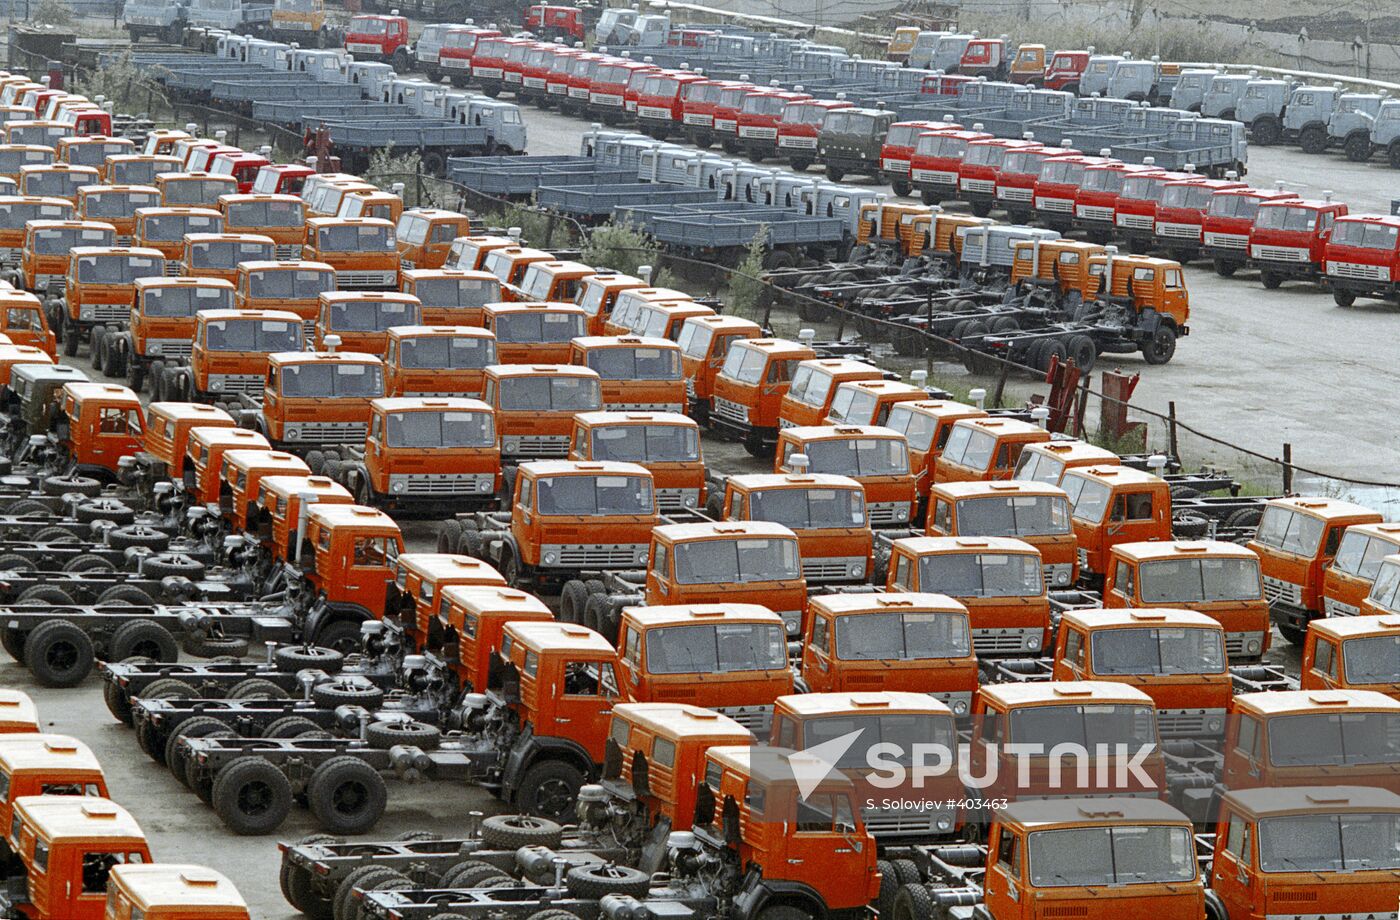 KamAz trucks